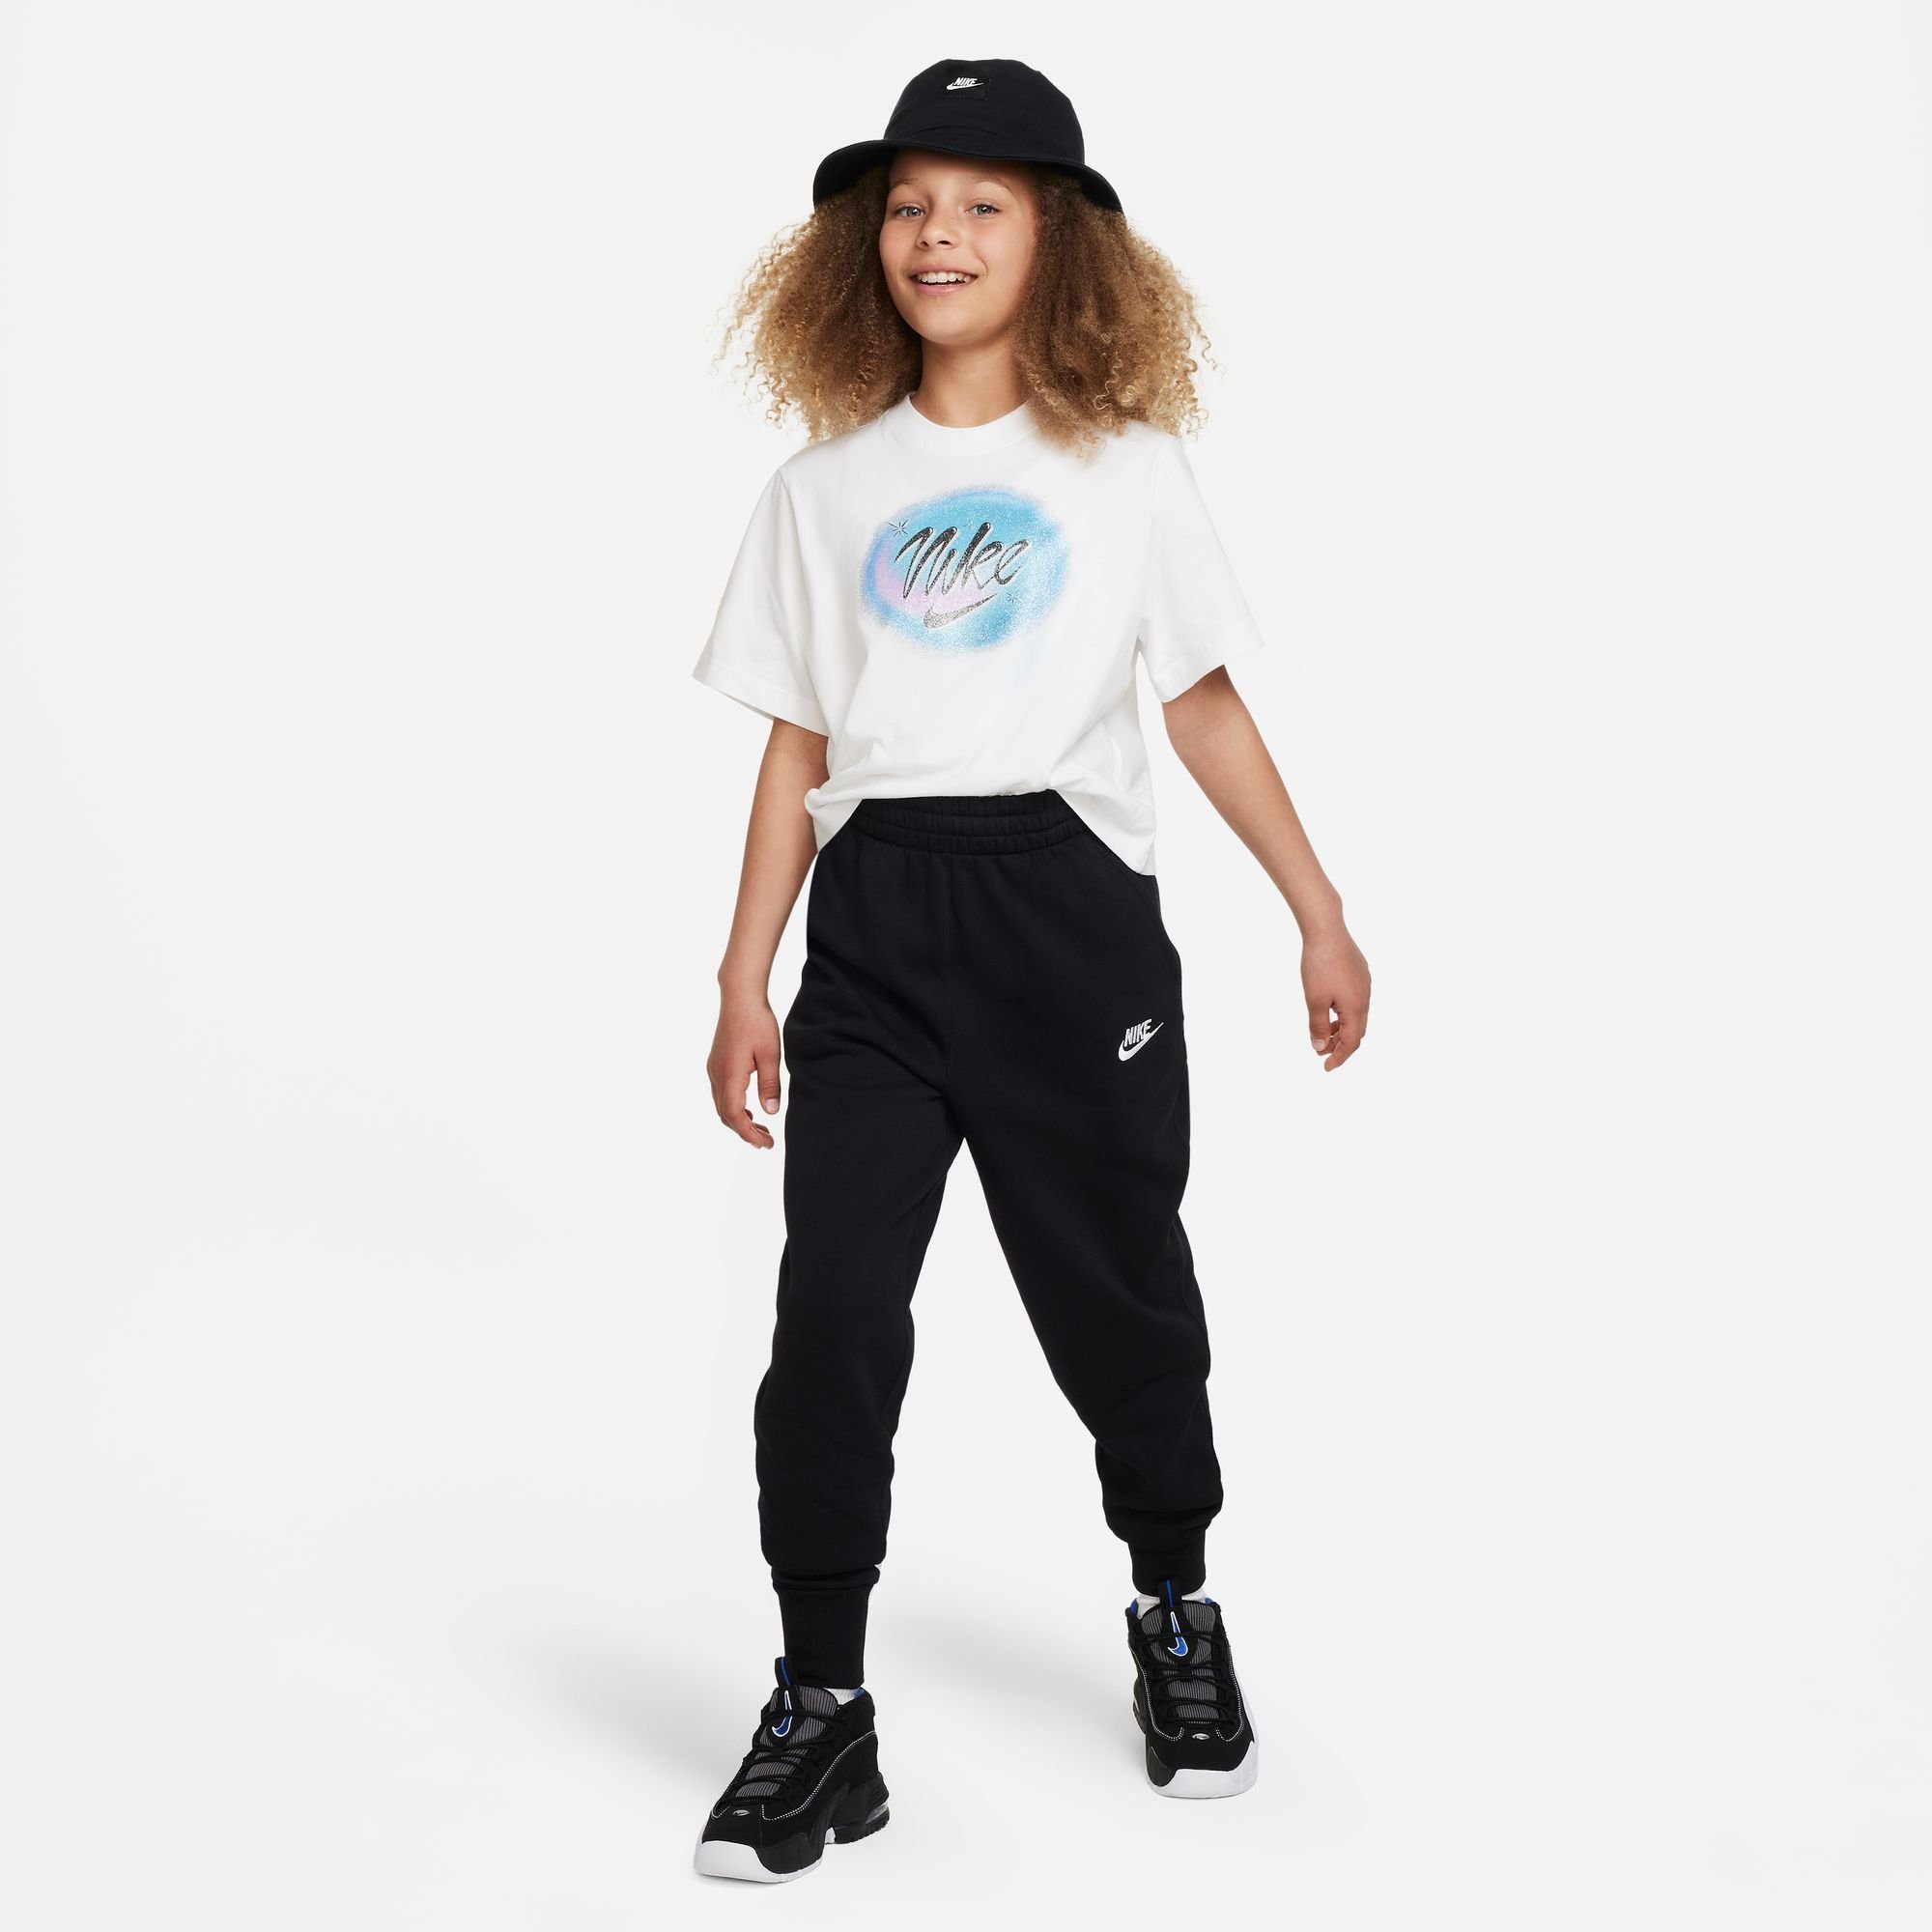 FLEECE (GIRLS) Nike HIGH-WAISTED BLACK/BLACK/WHITE KIDS' Sportswear CLUB FITTED BIG Jogginghose PANTS